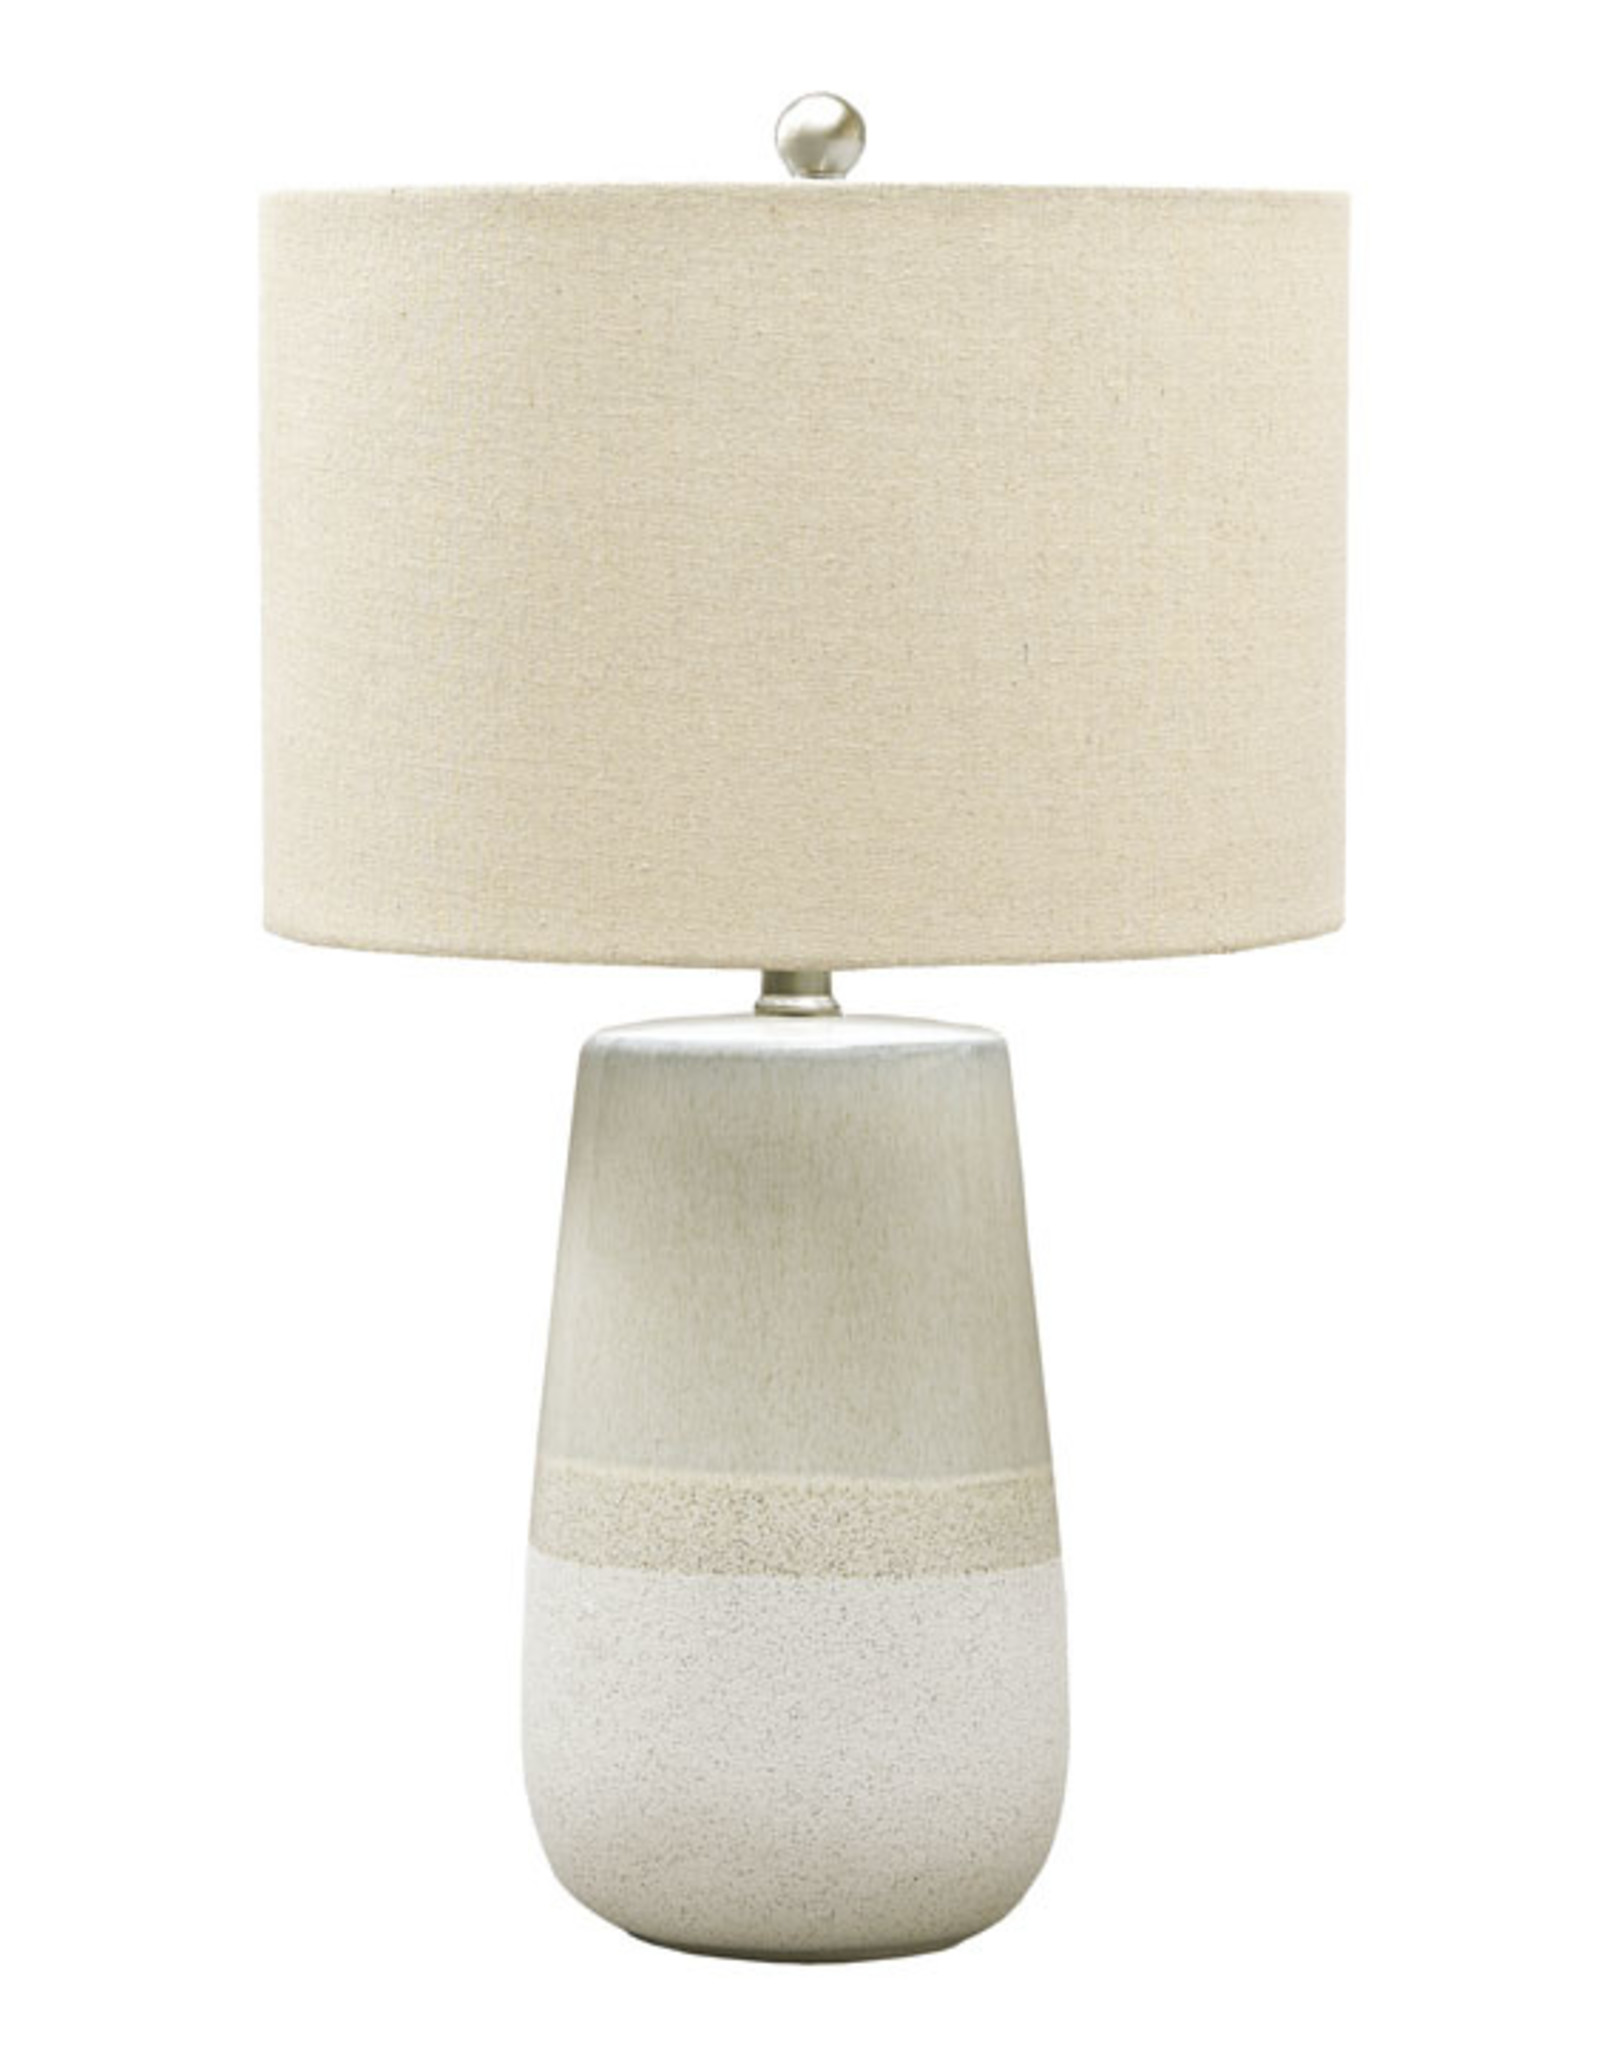 Table Lamp, Ceramic, Beige/wht, 15.5" W x 15.5" D x 26.5" H, Sharon